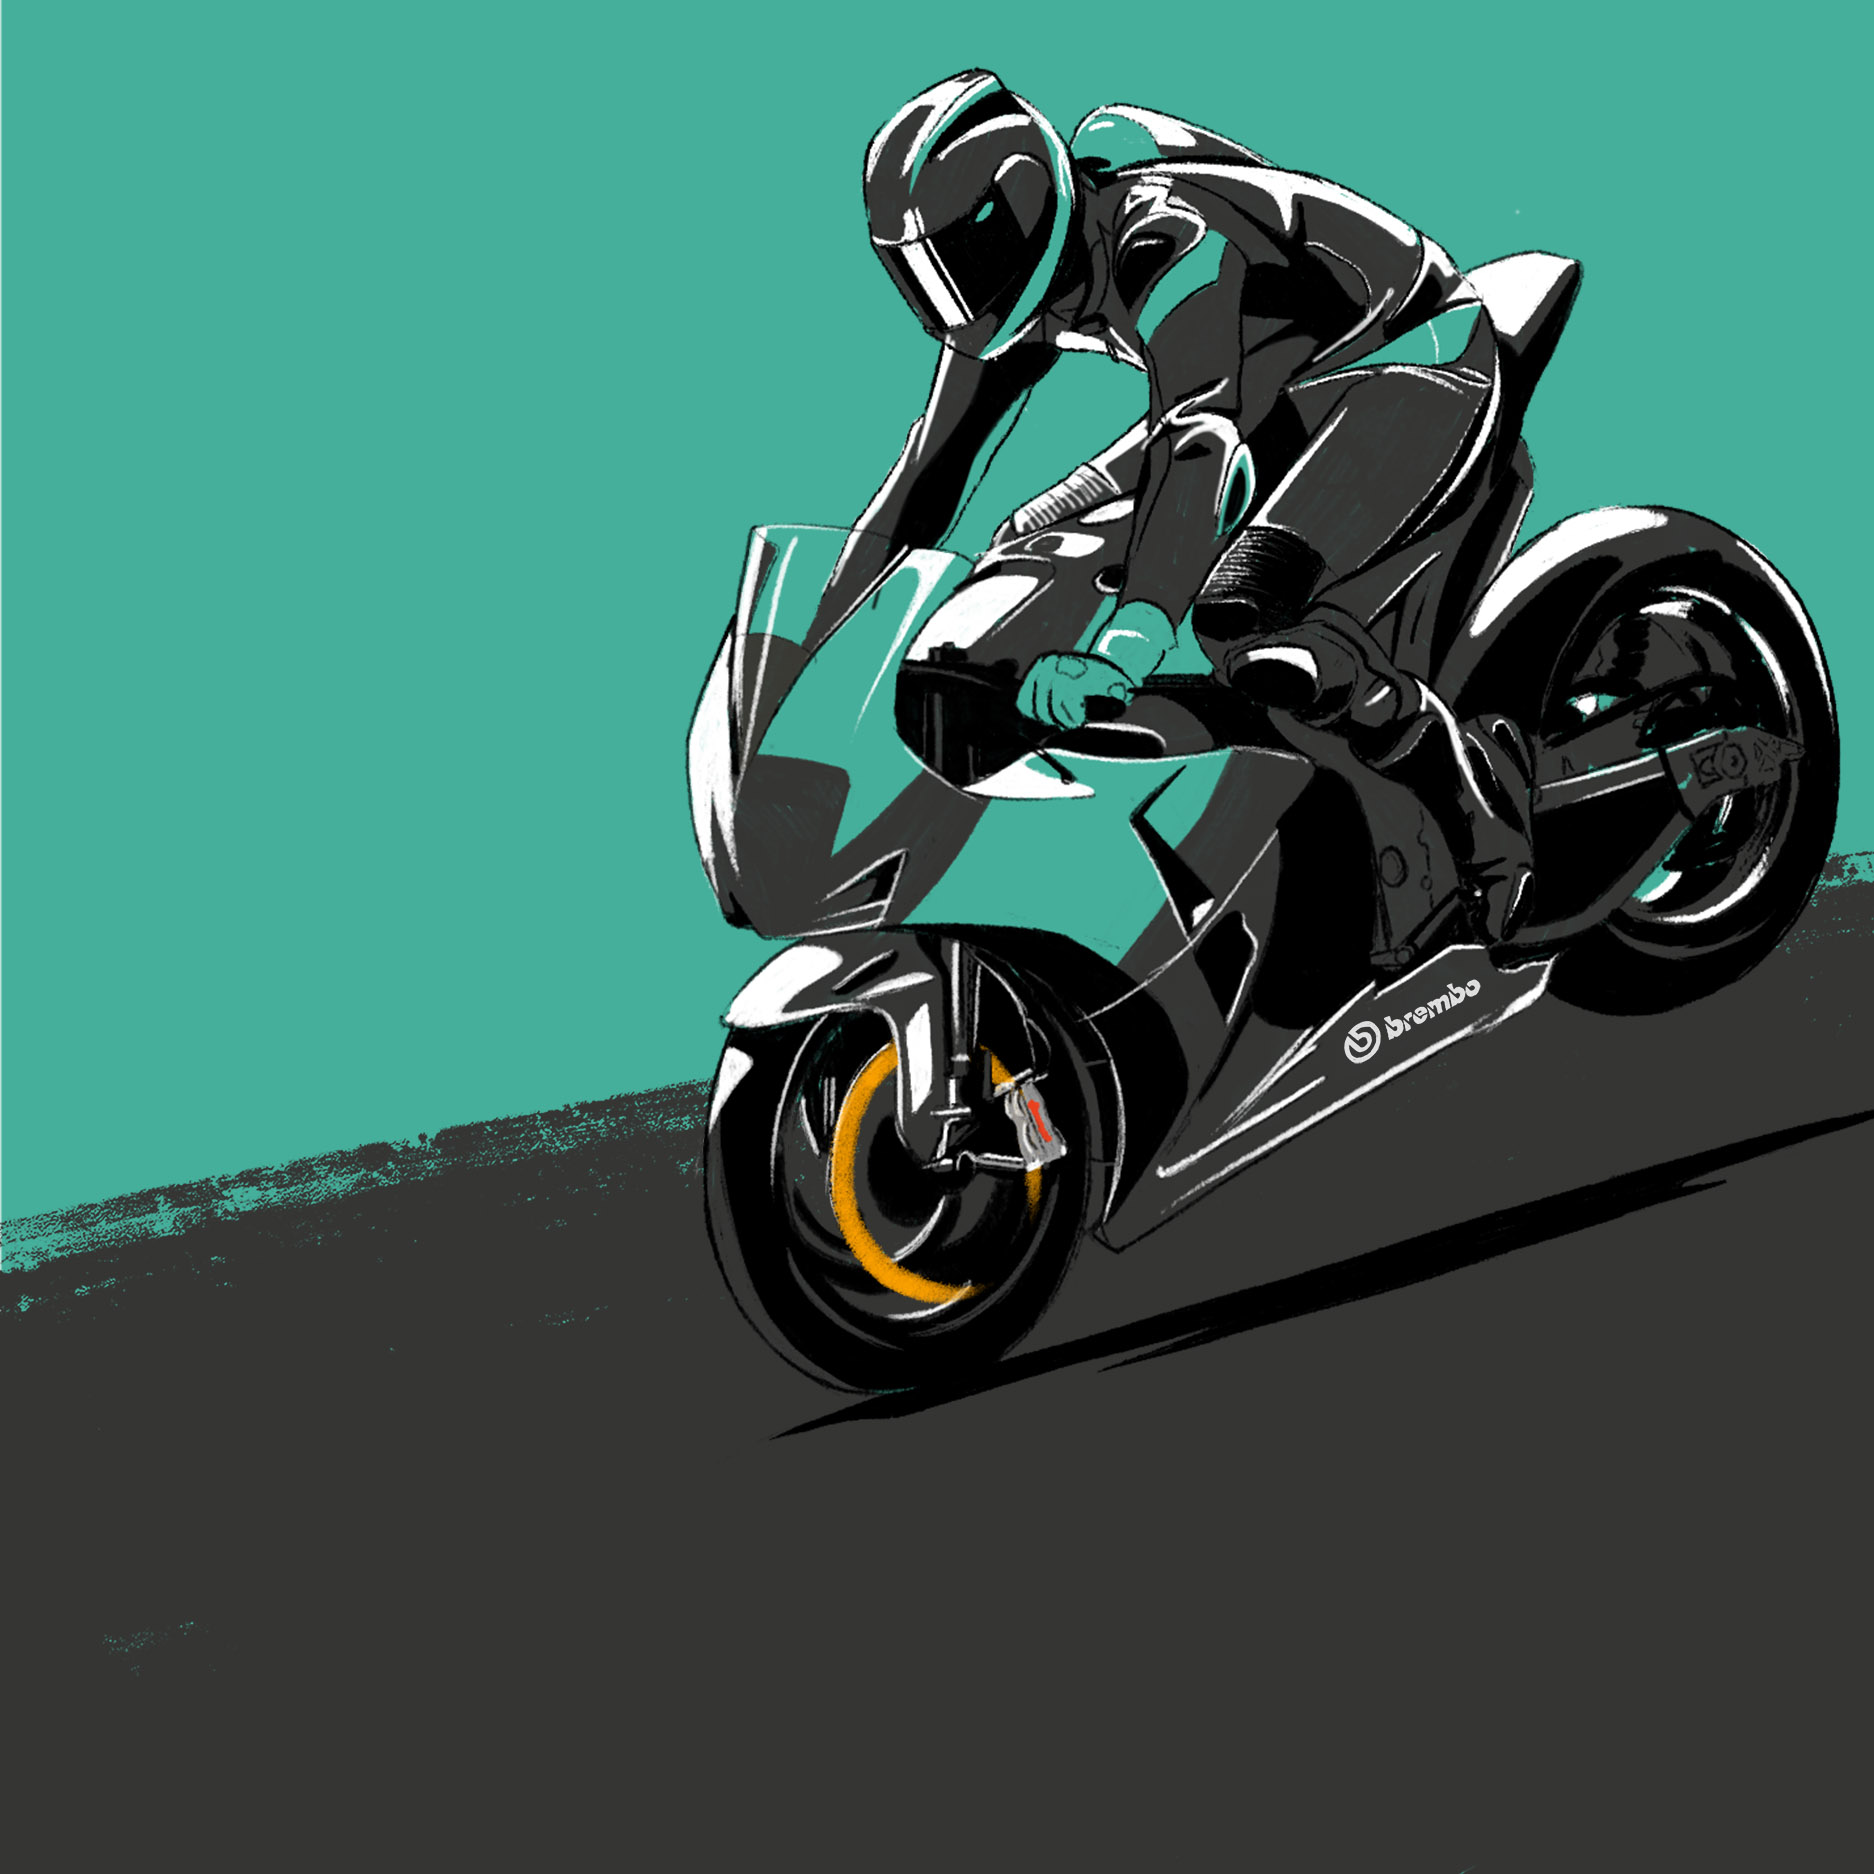 General 1874x1874 Brembo racing illustration motorcycle Moto GP